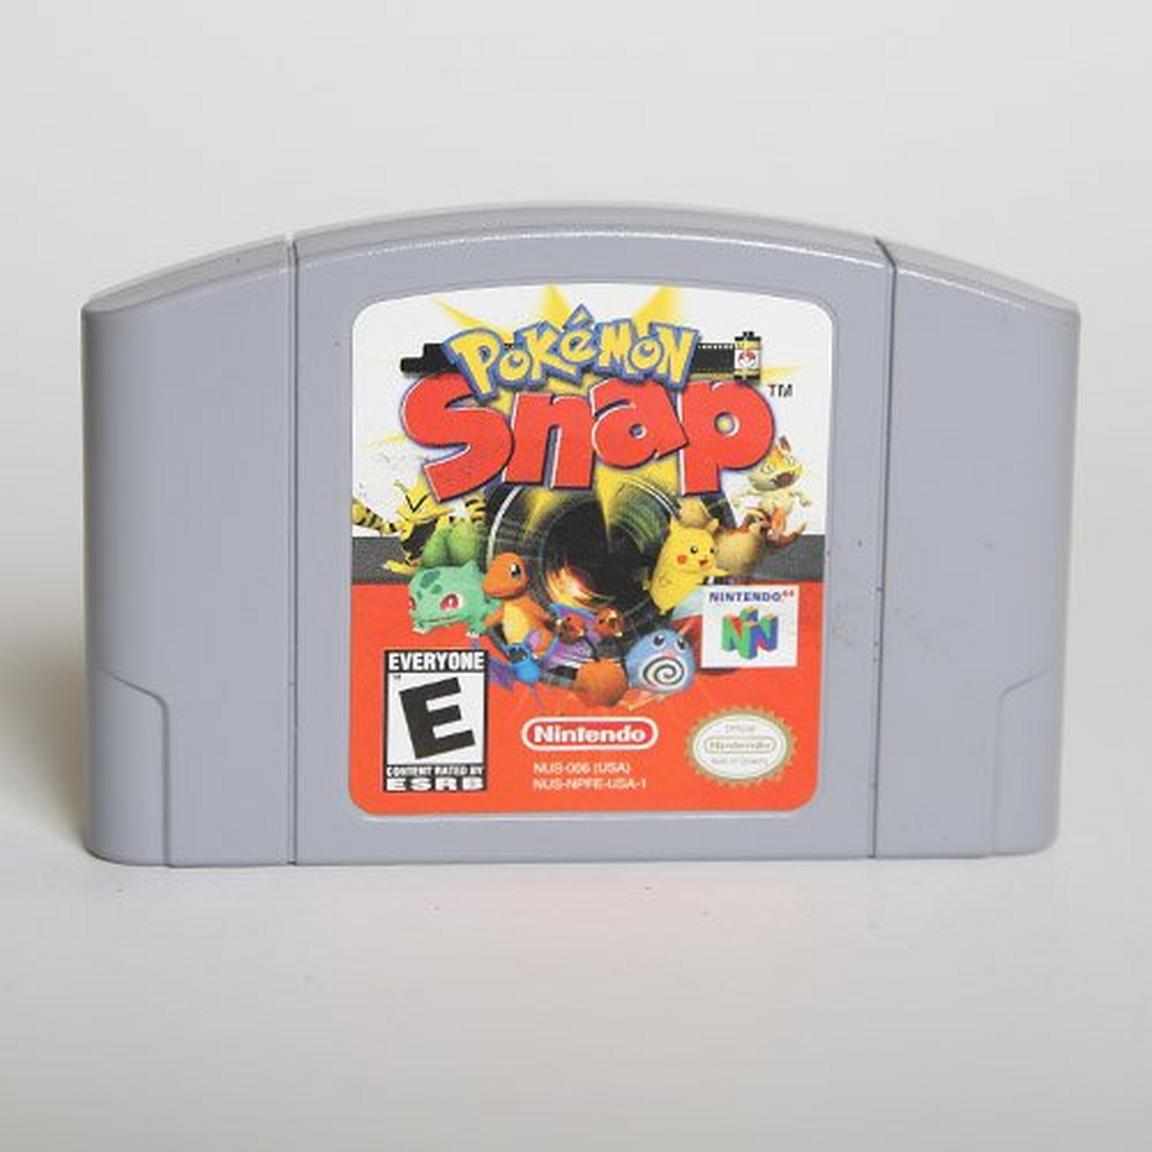 Pokemon Snap - Nintendo 64, Pre-Owned